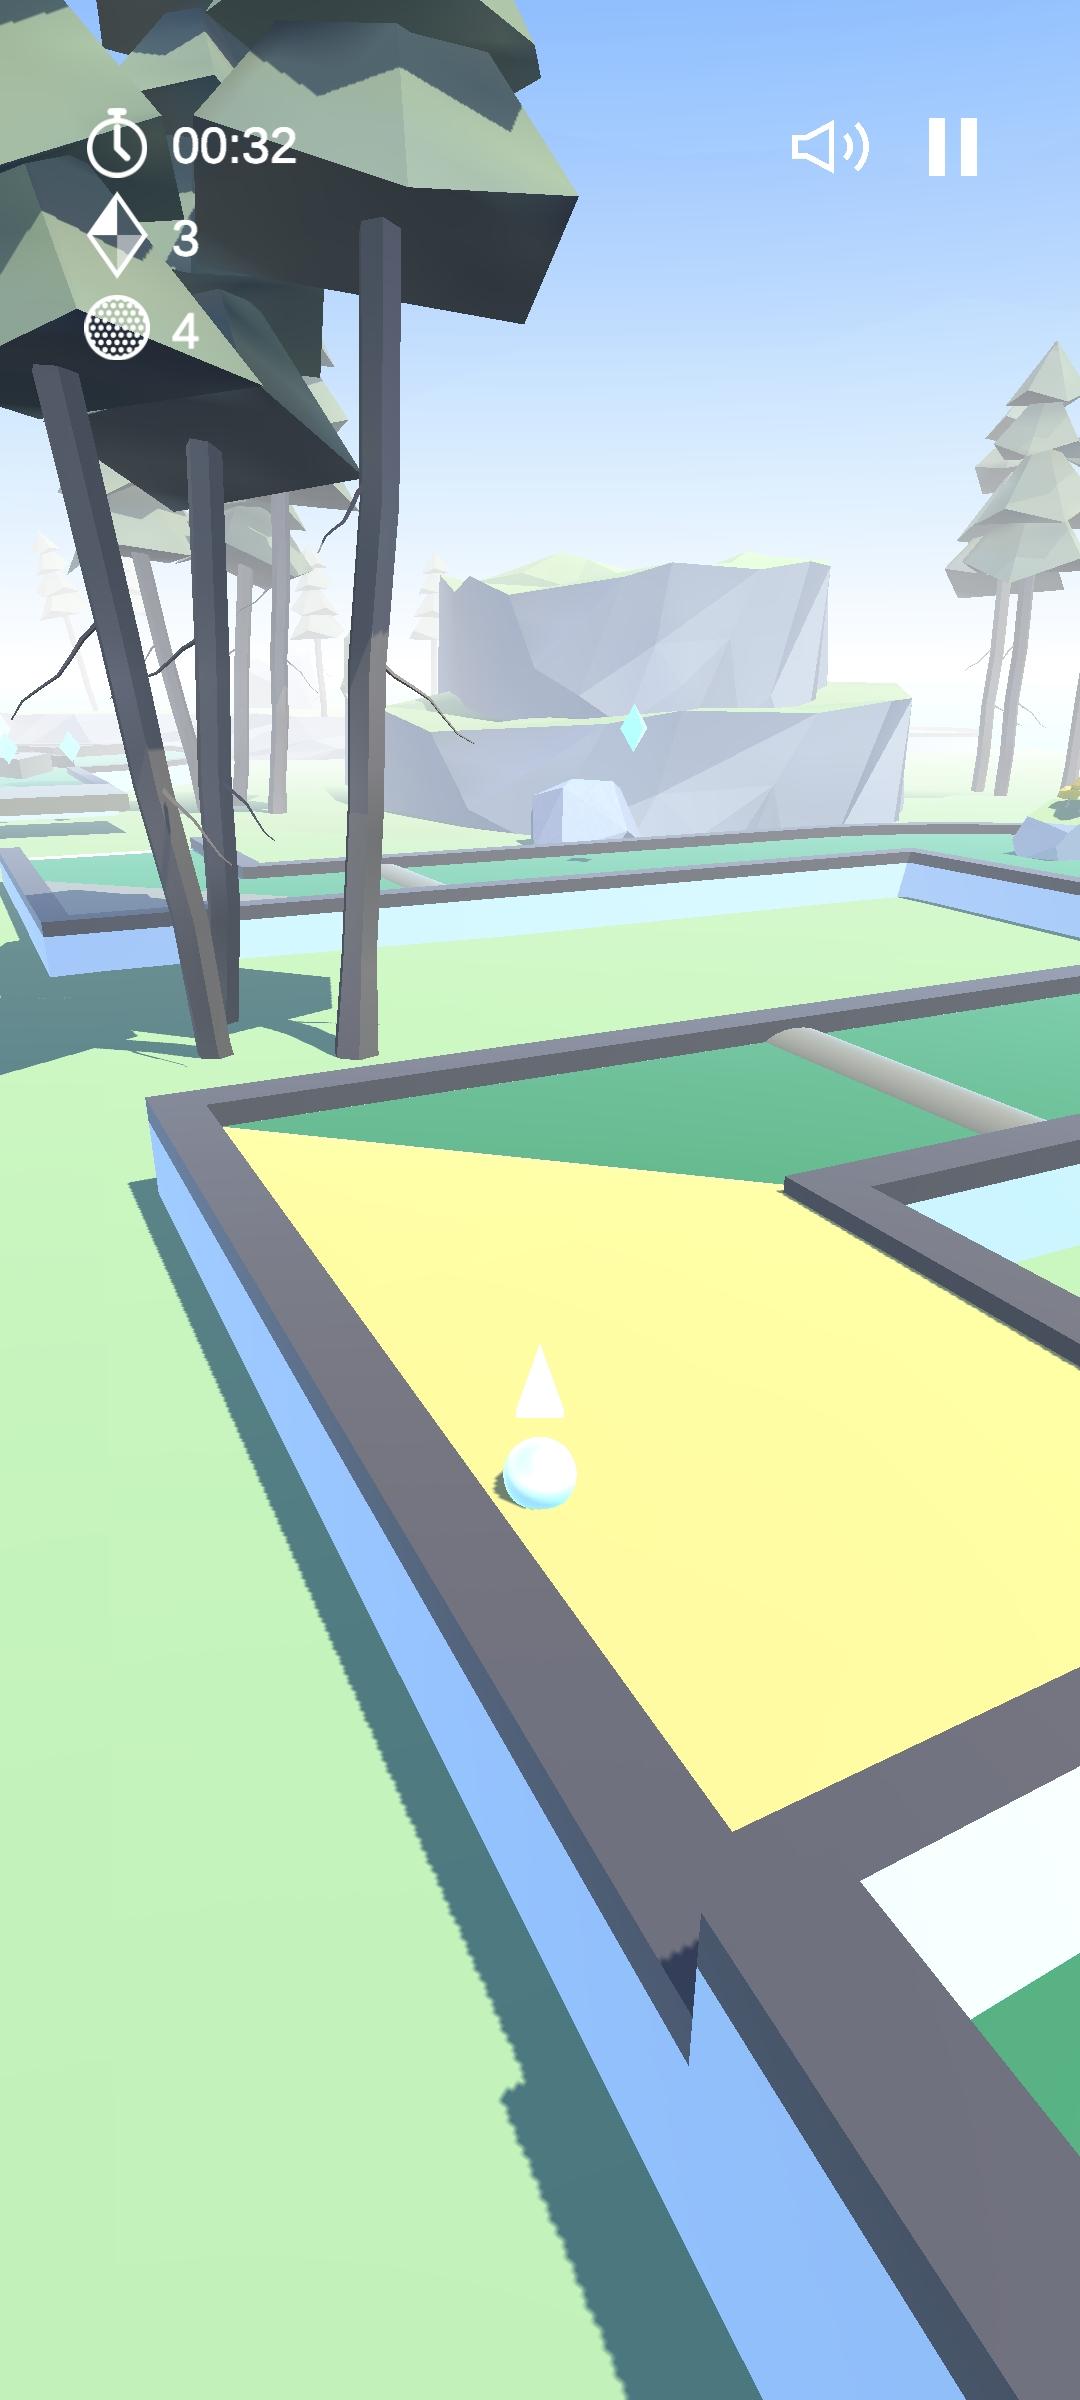 Mini Golf Adventure 2.11 Screenshot 6